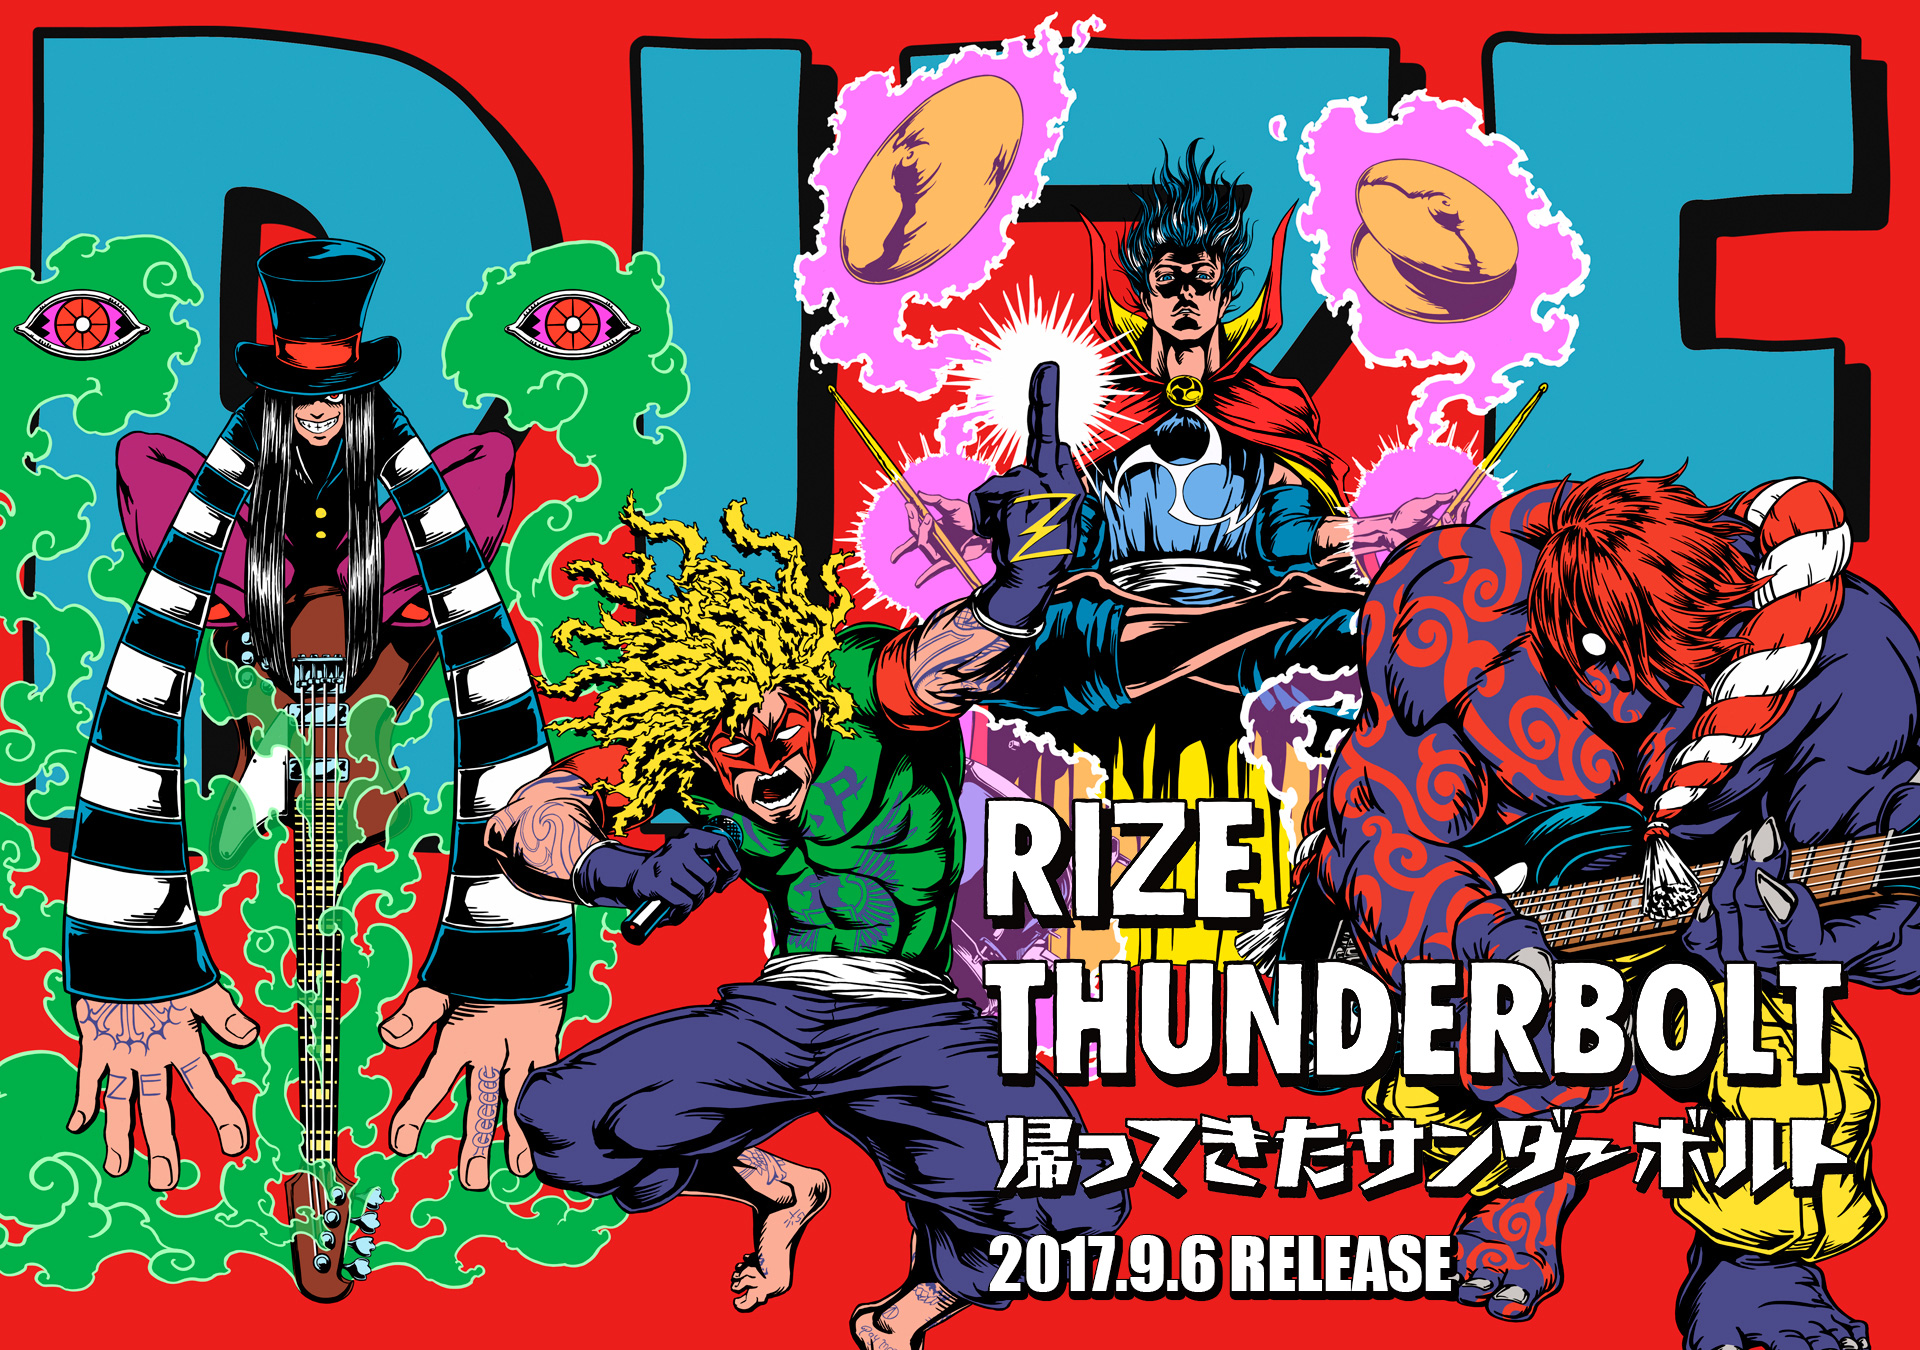 Rize 8th Album Thunderbolt 帰ってきたサンダーボルト 17 9 6 Release